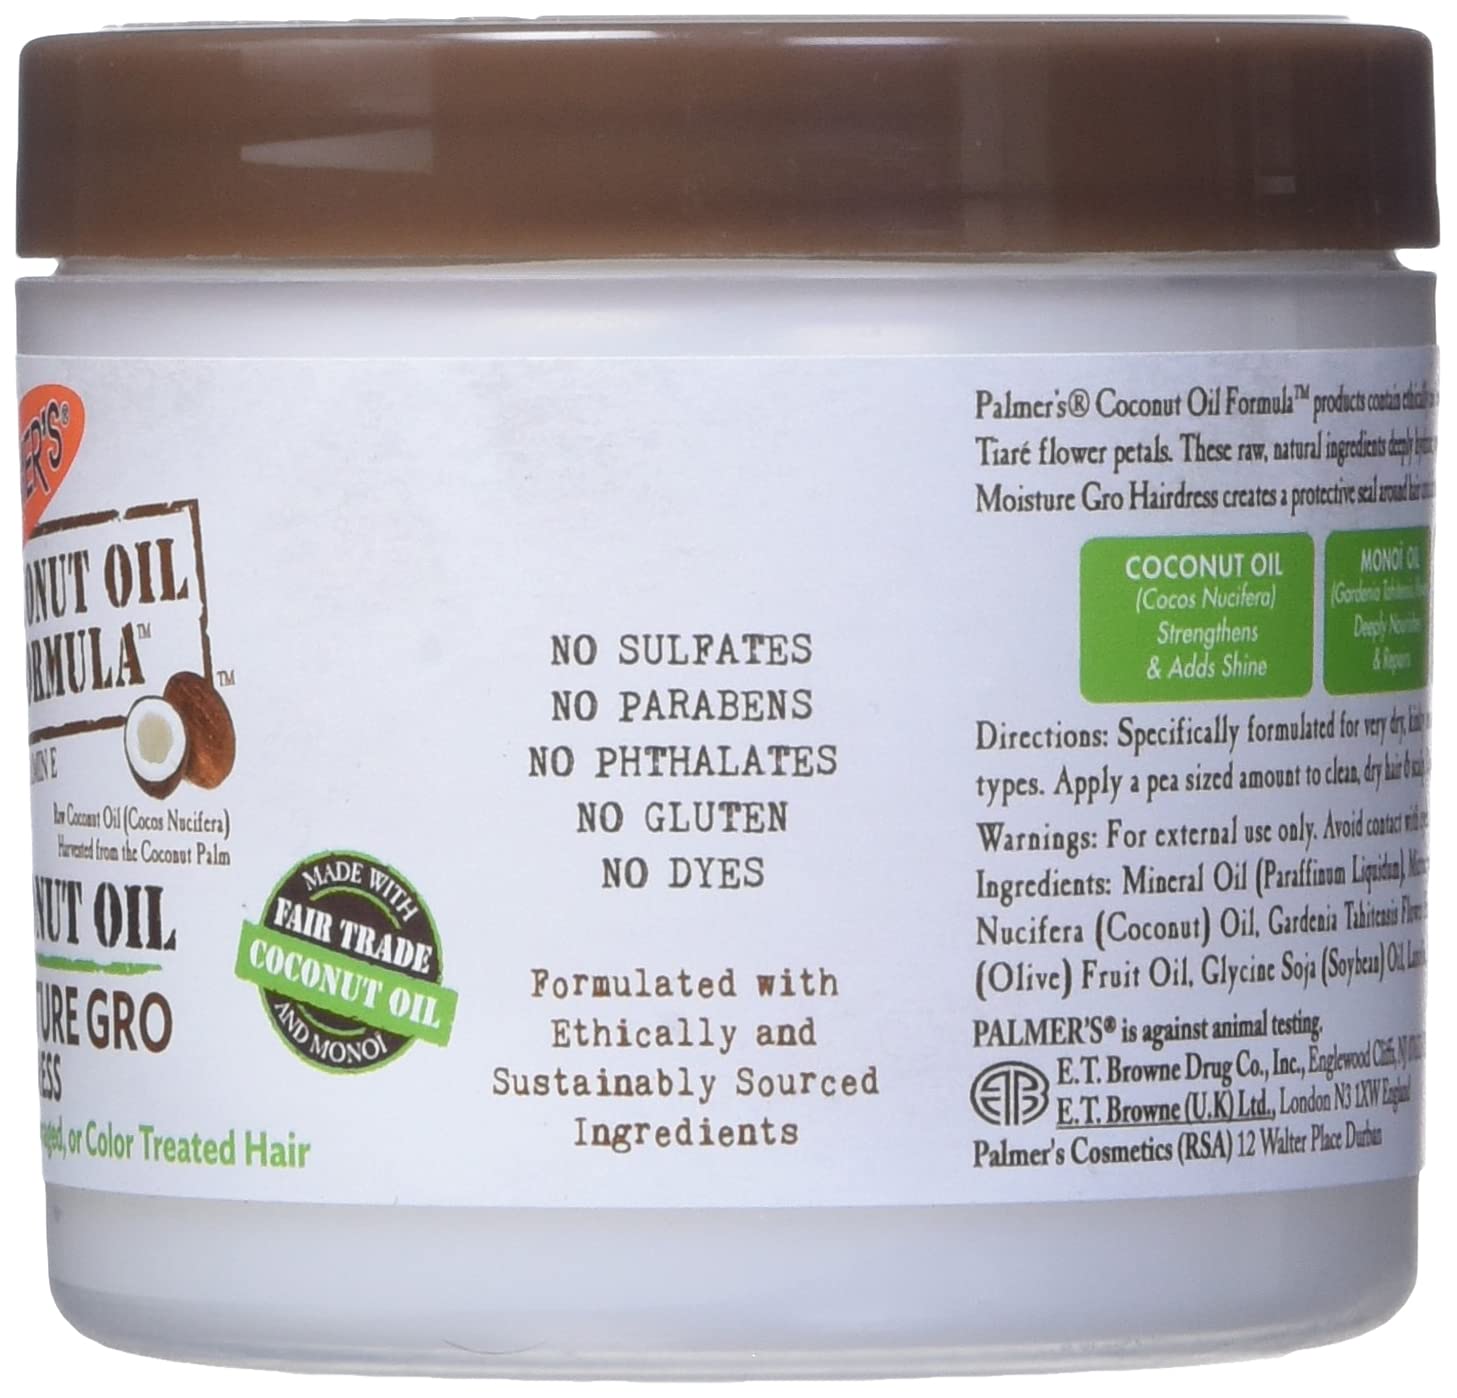 Palmer's® Coconut Oil Formula™ Moisture Gro Hairdress, 5.25 oz